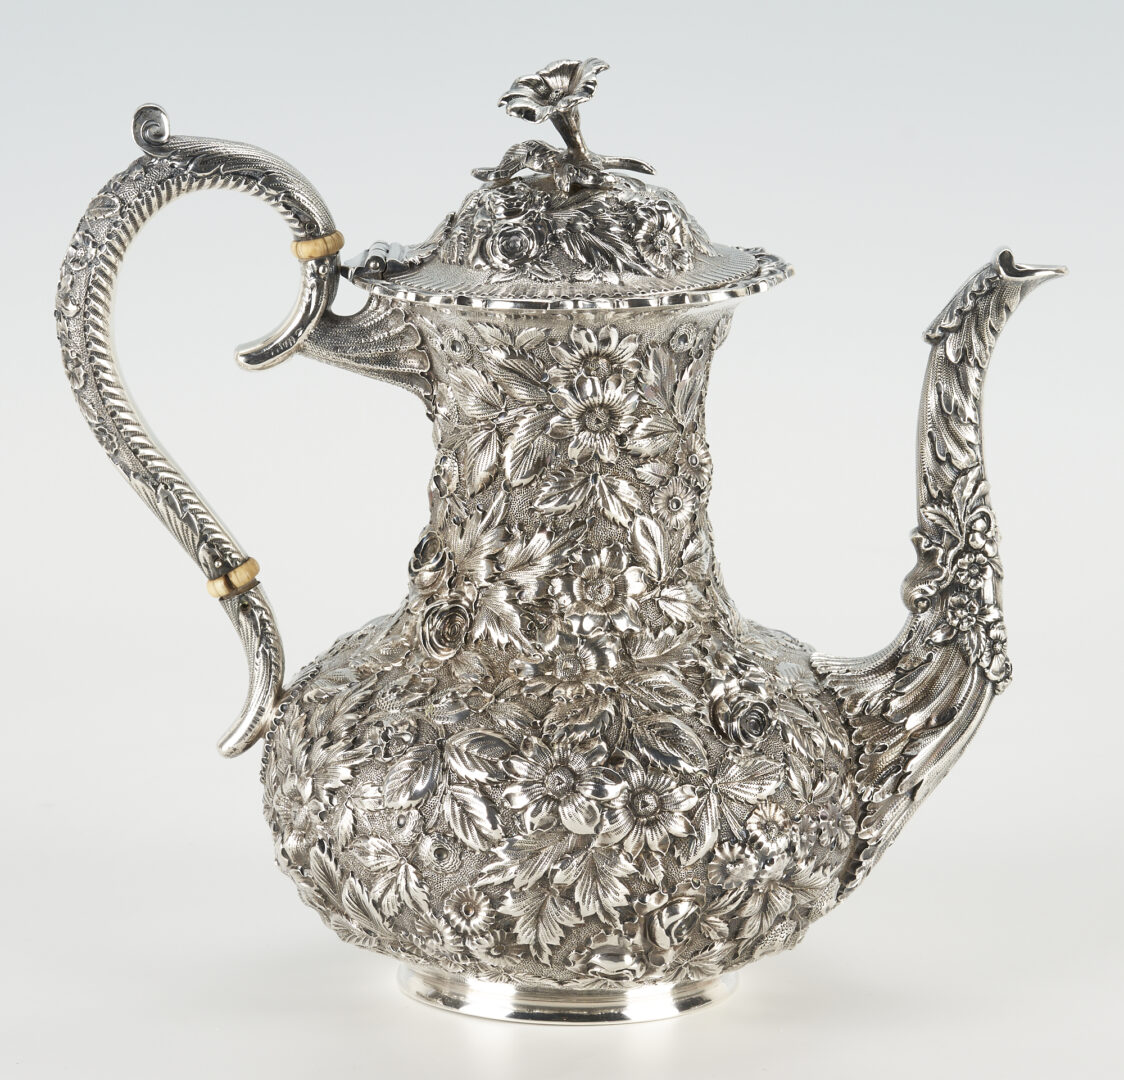 Lot 47: 5-Piece Baltimore Repousse Sterling Silver Tea Set, c. 1900